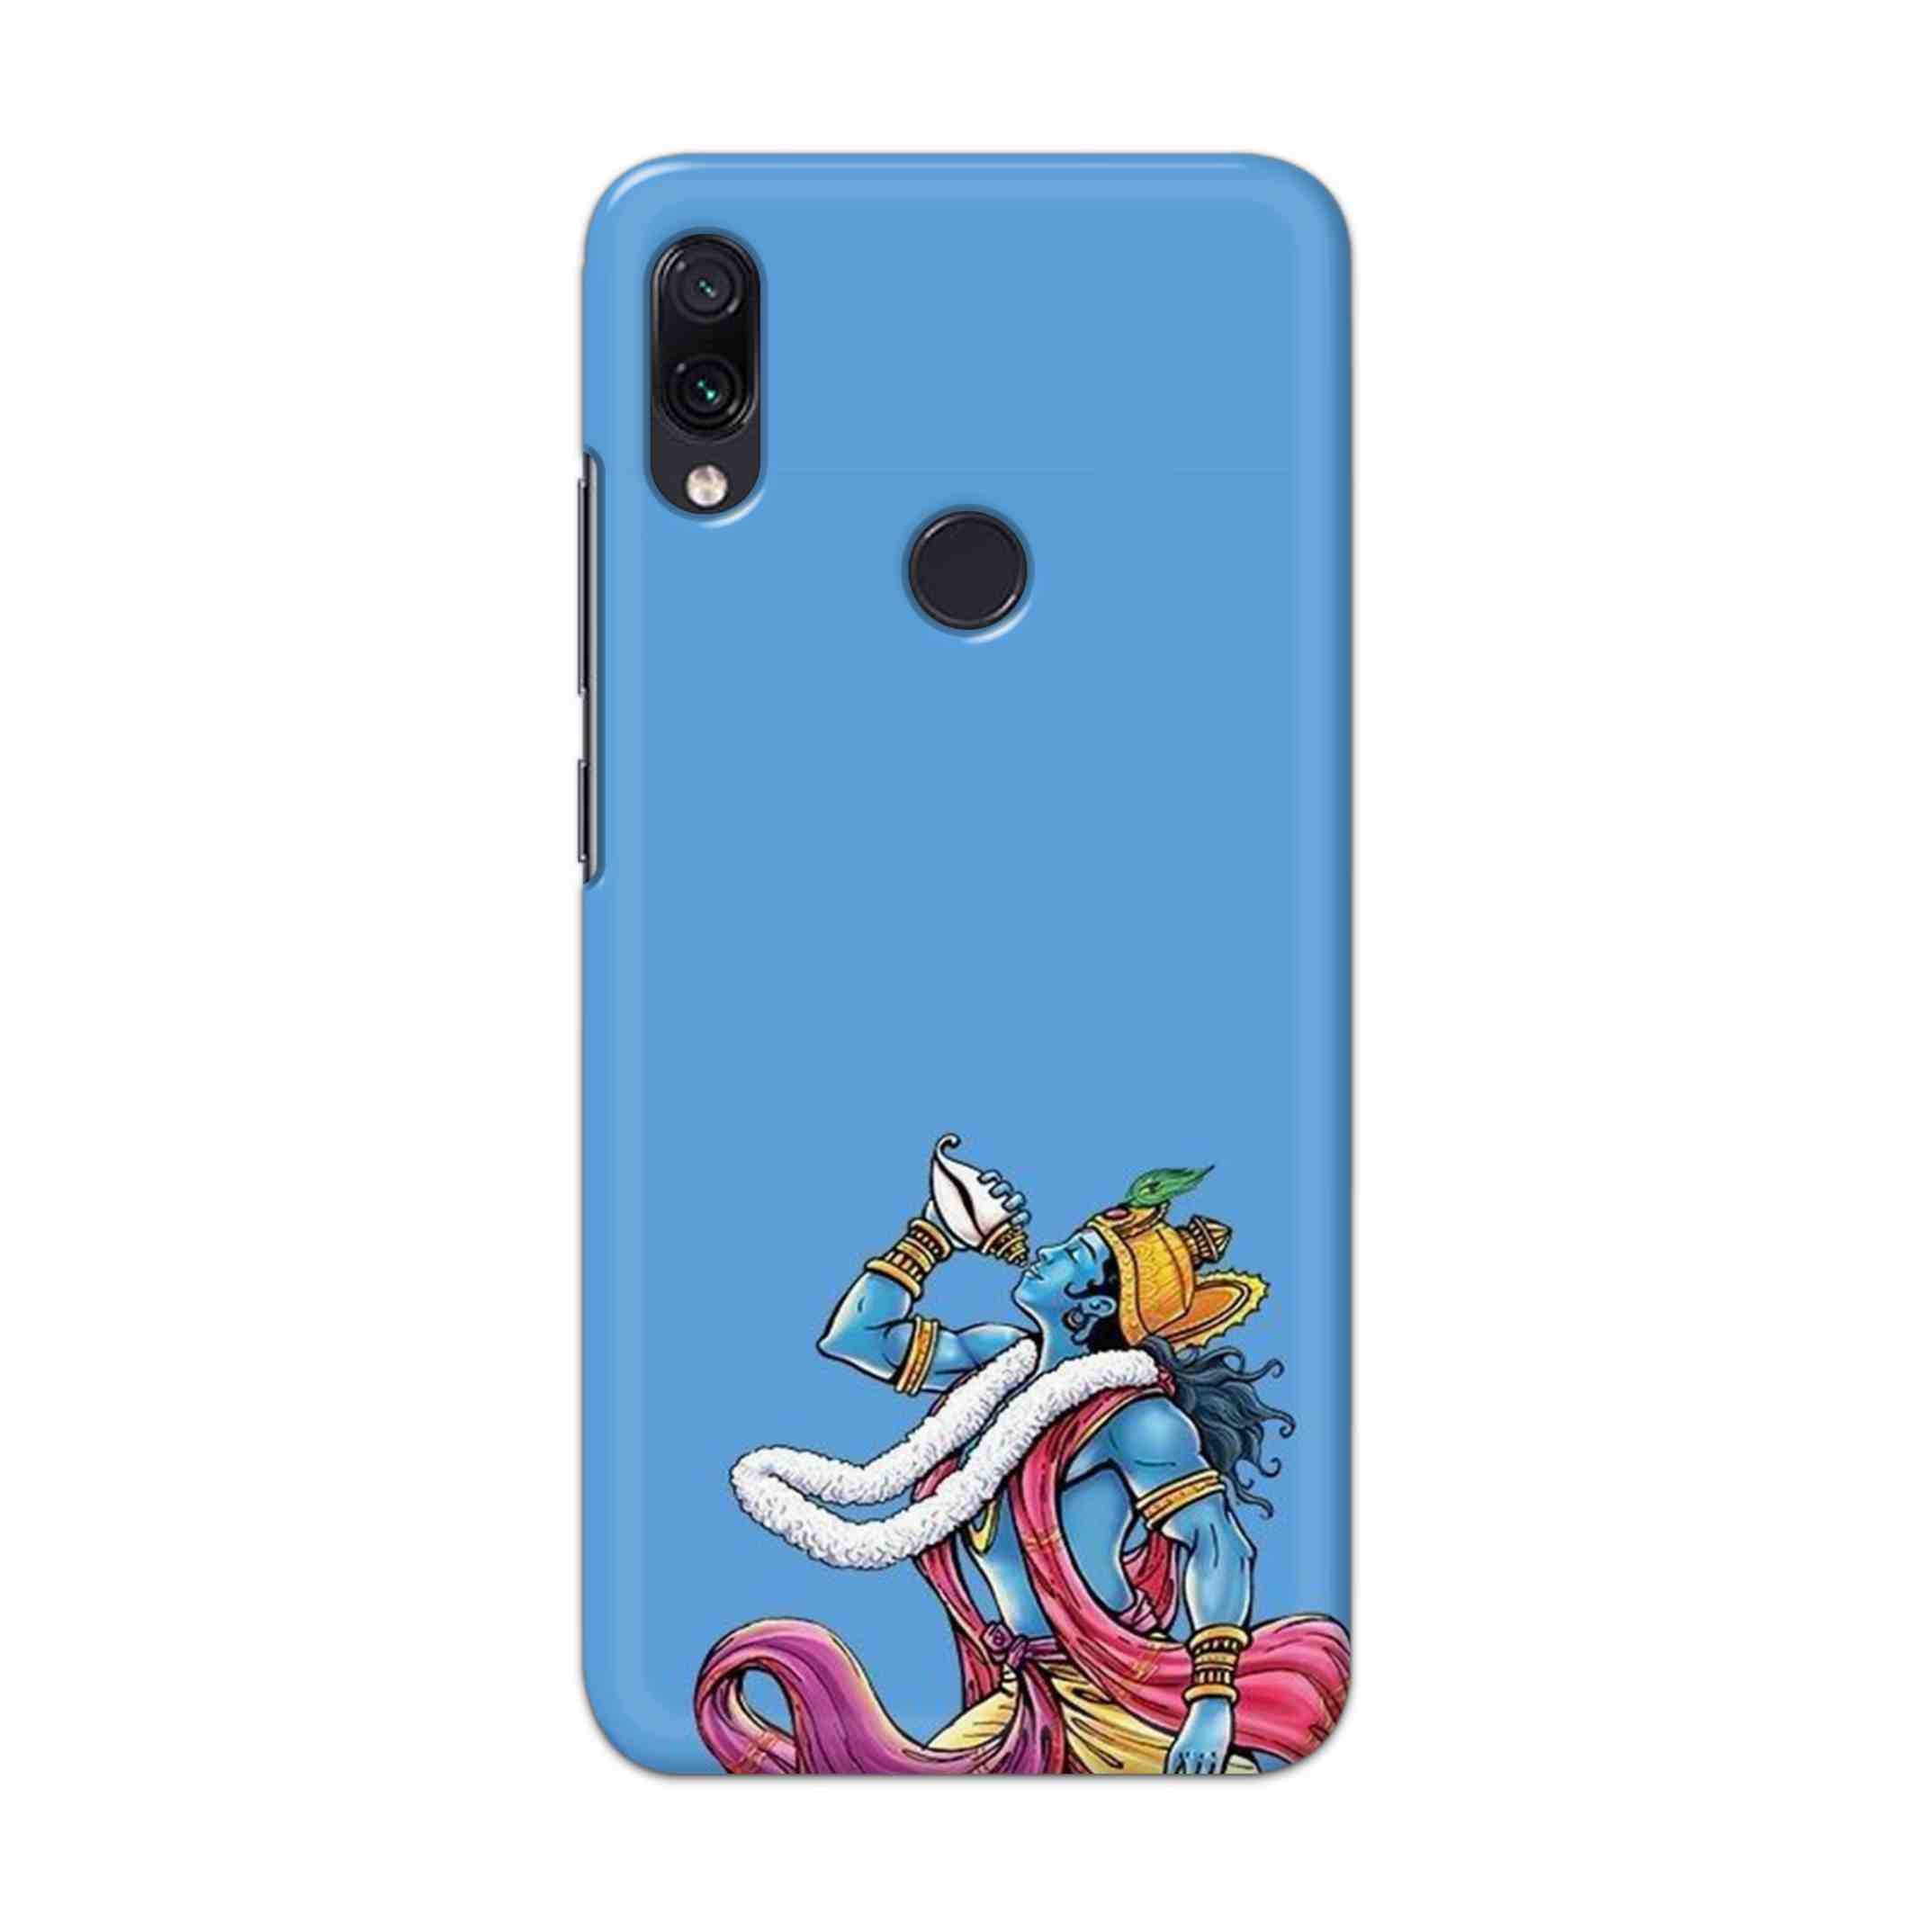 Buy Krishna Hard Back Mobile Phone Case Cover For Xiaomi Redmi 7 Online